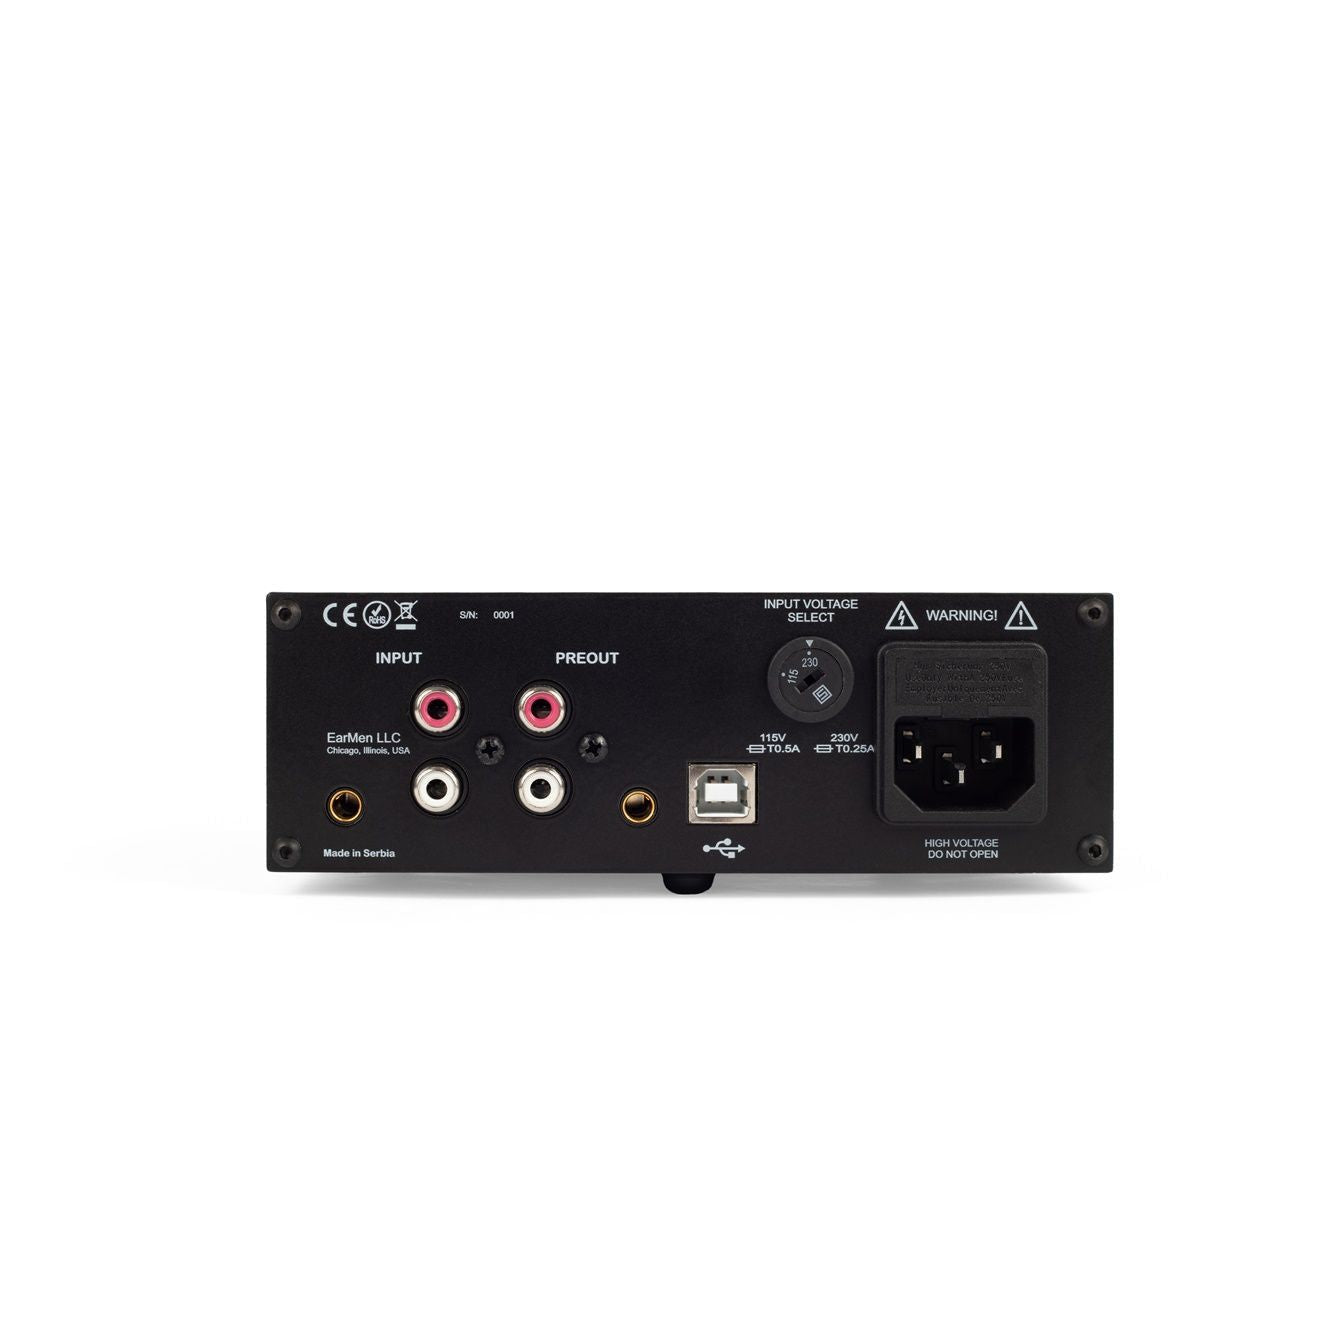 EarMen ST-Amp Desktop Fully Balanced DAC / Headphone Amp / Preamp